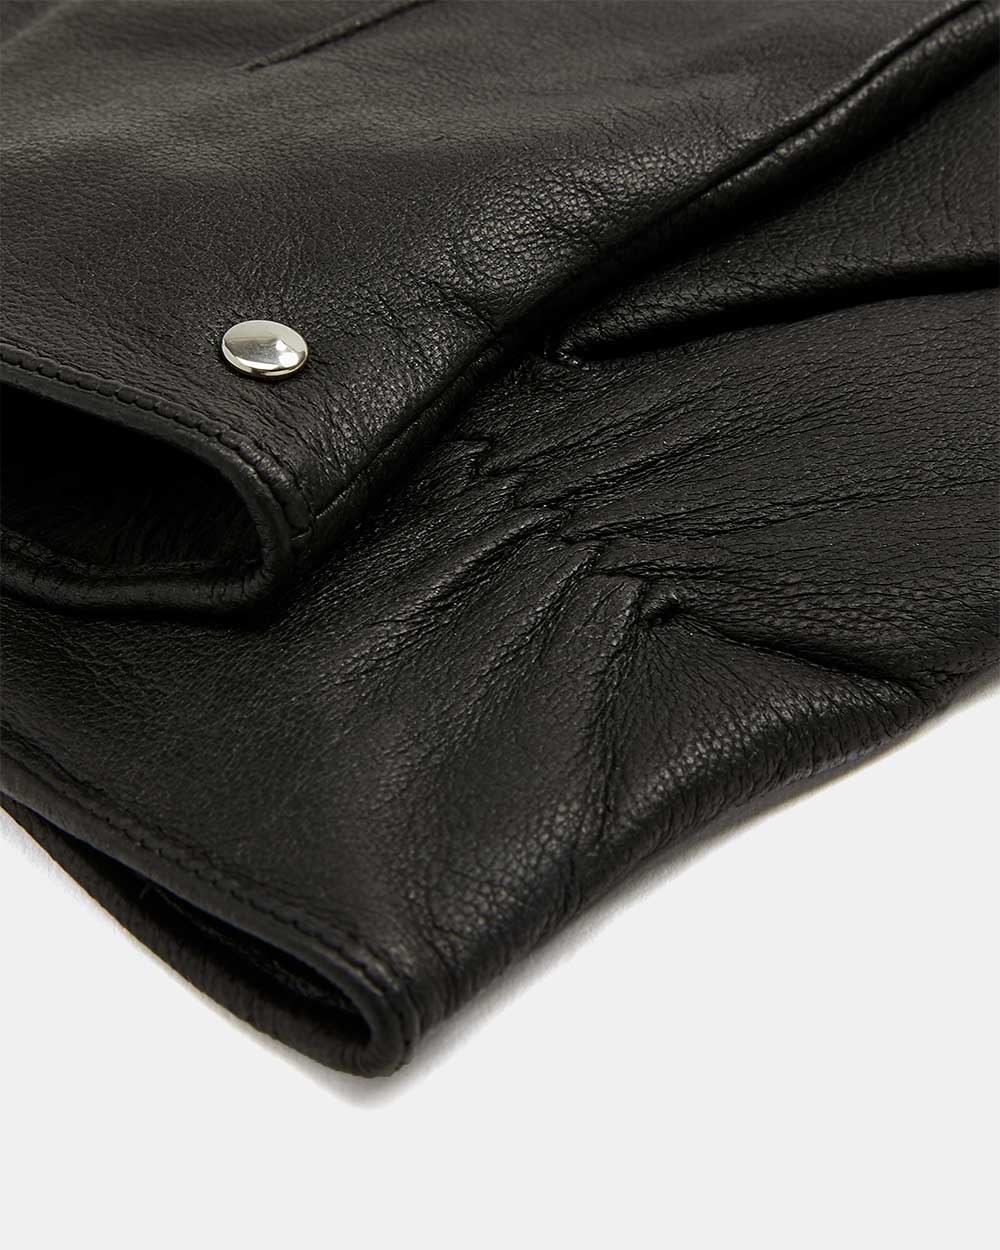 Basic Leather Glove | RW&CO.